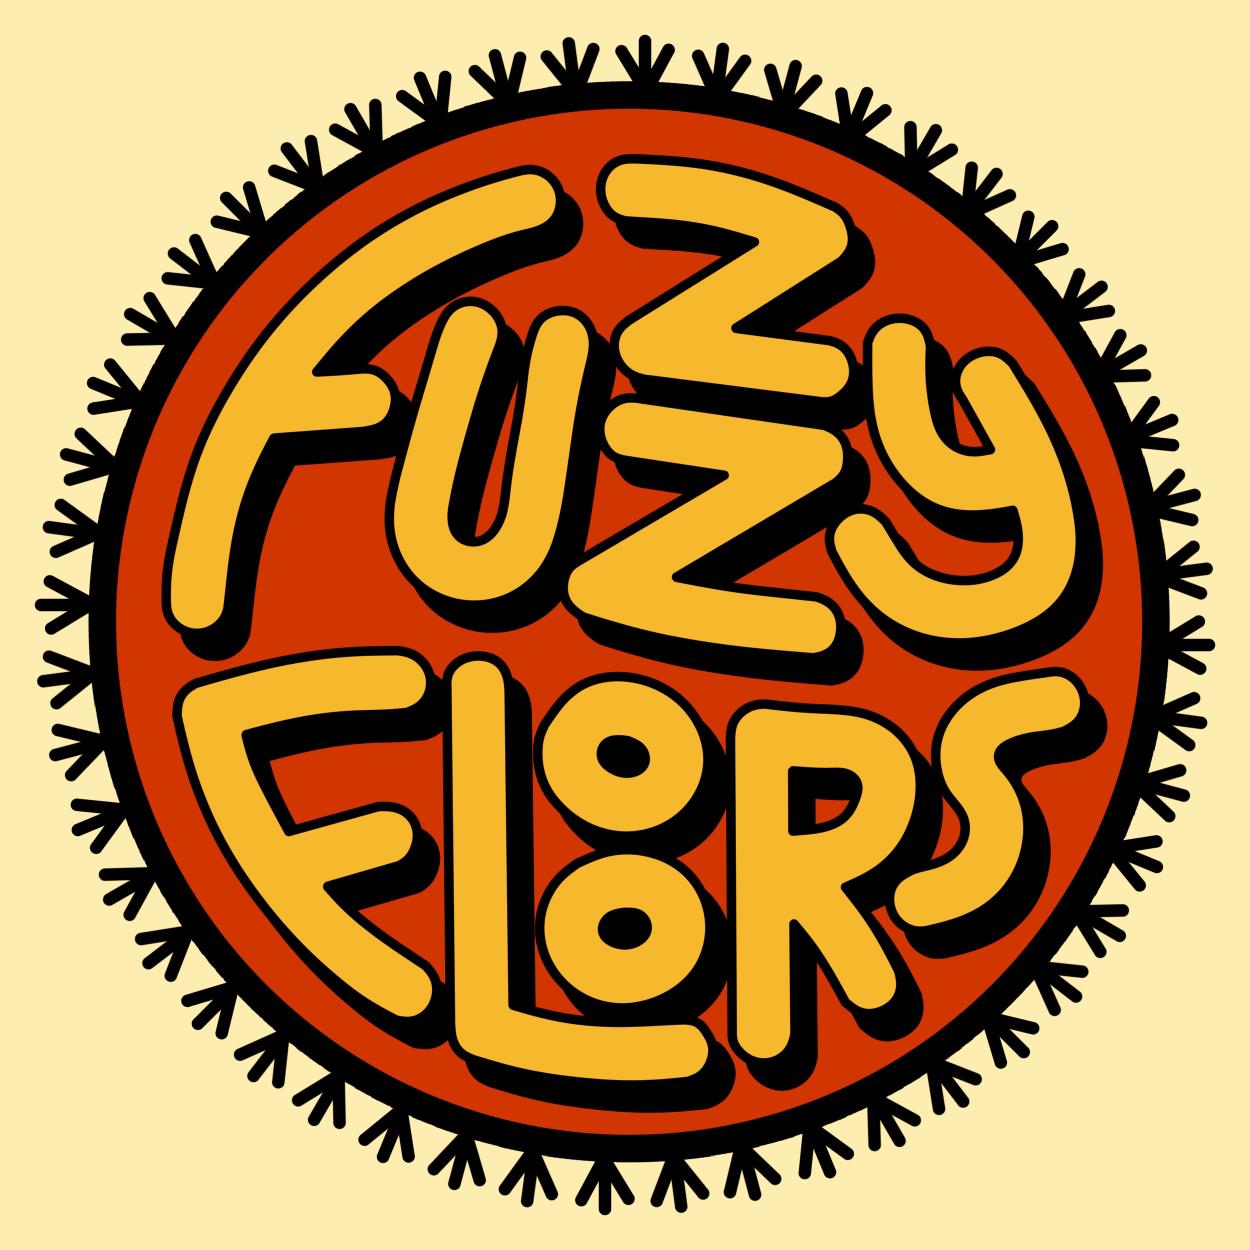 Fuzzy Floors's images